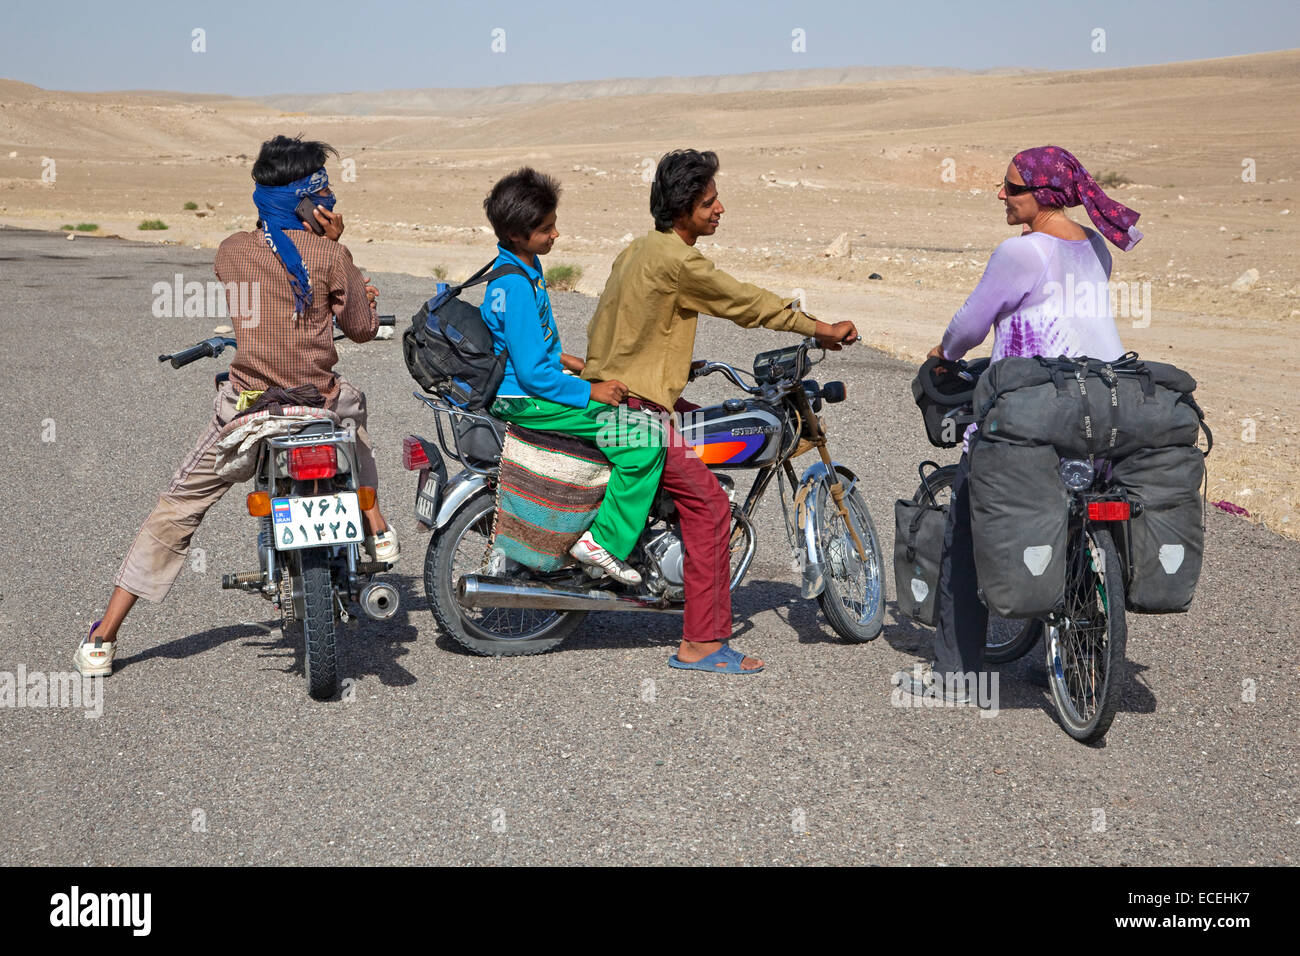 Iranian boys on motorbikes talking to female Western touring cyclist in Iran, close to the Turkmenistan border in Karakum desert Stock Photo